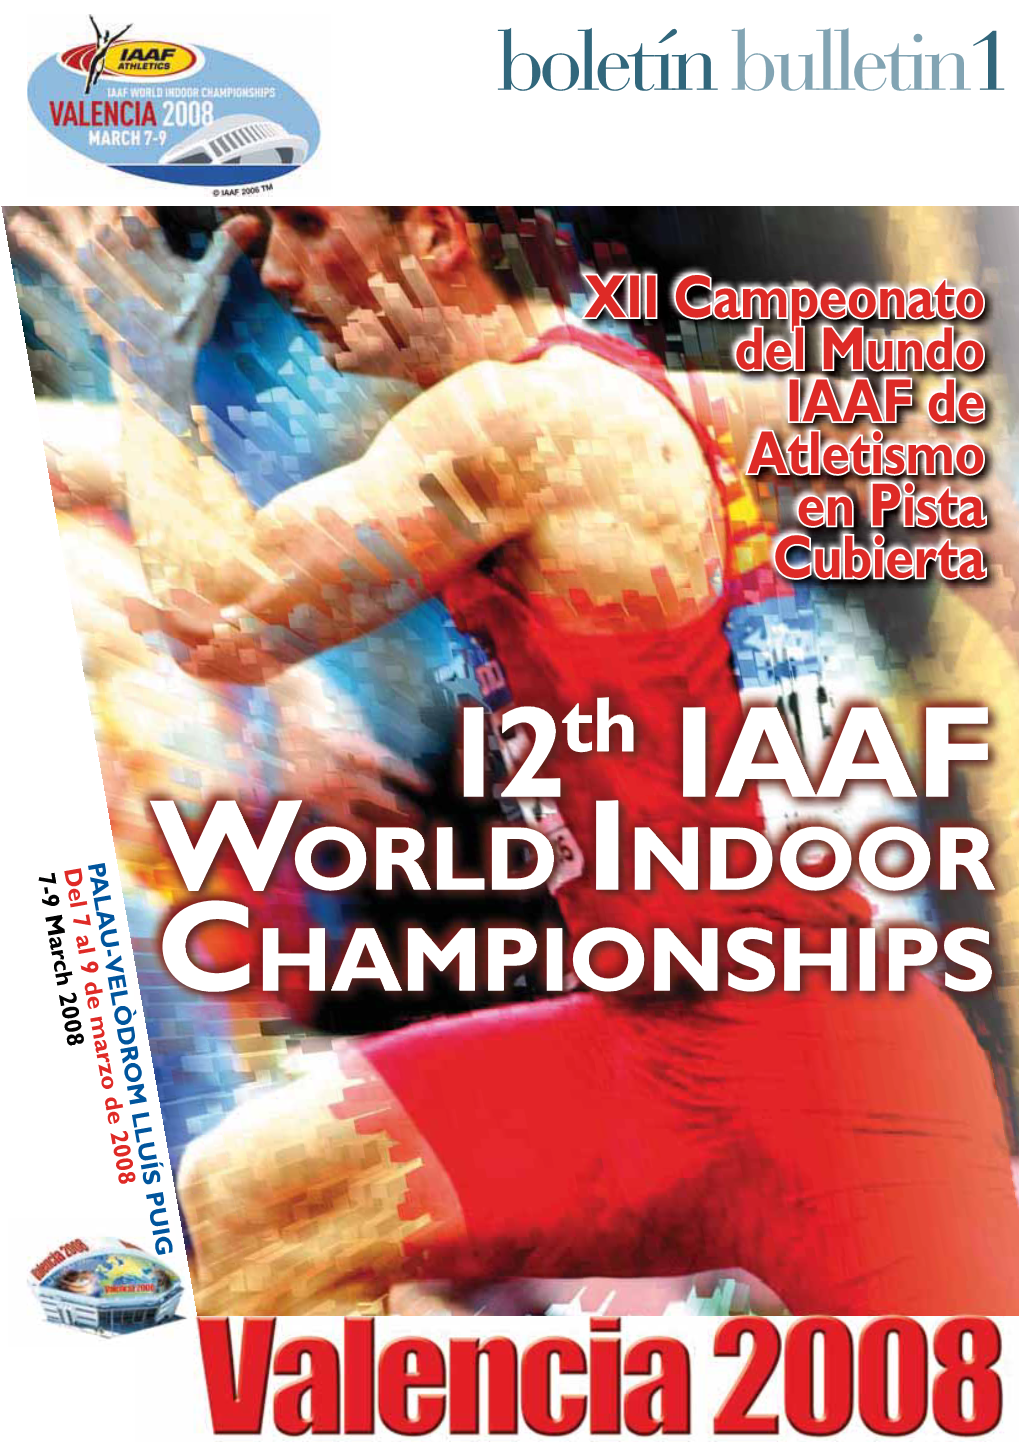 World Indoor Championships World Indoor